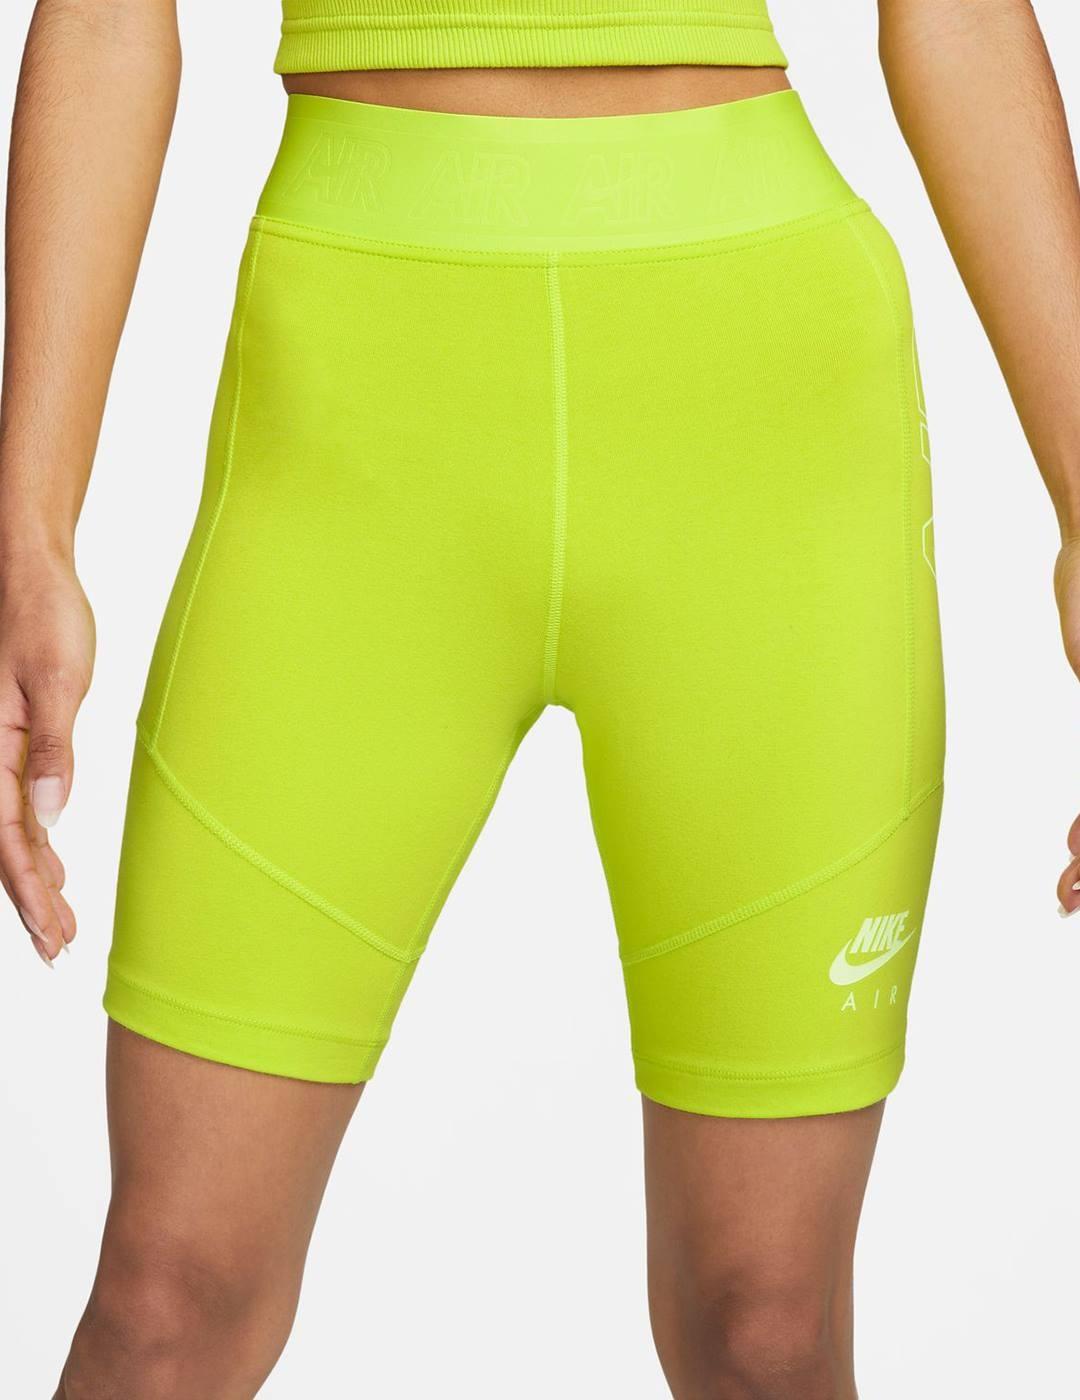 Mallas Nike Air Verde Para Mujer